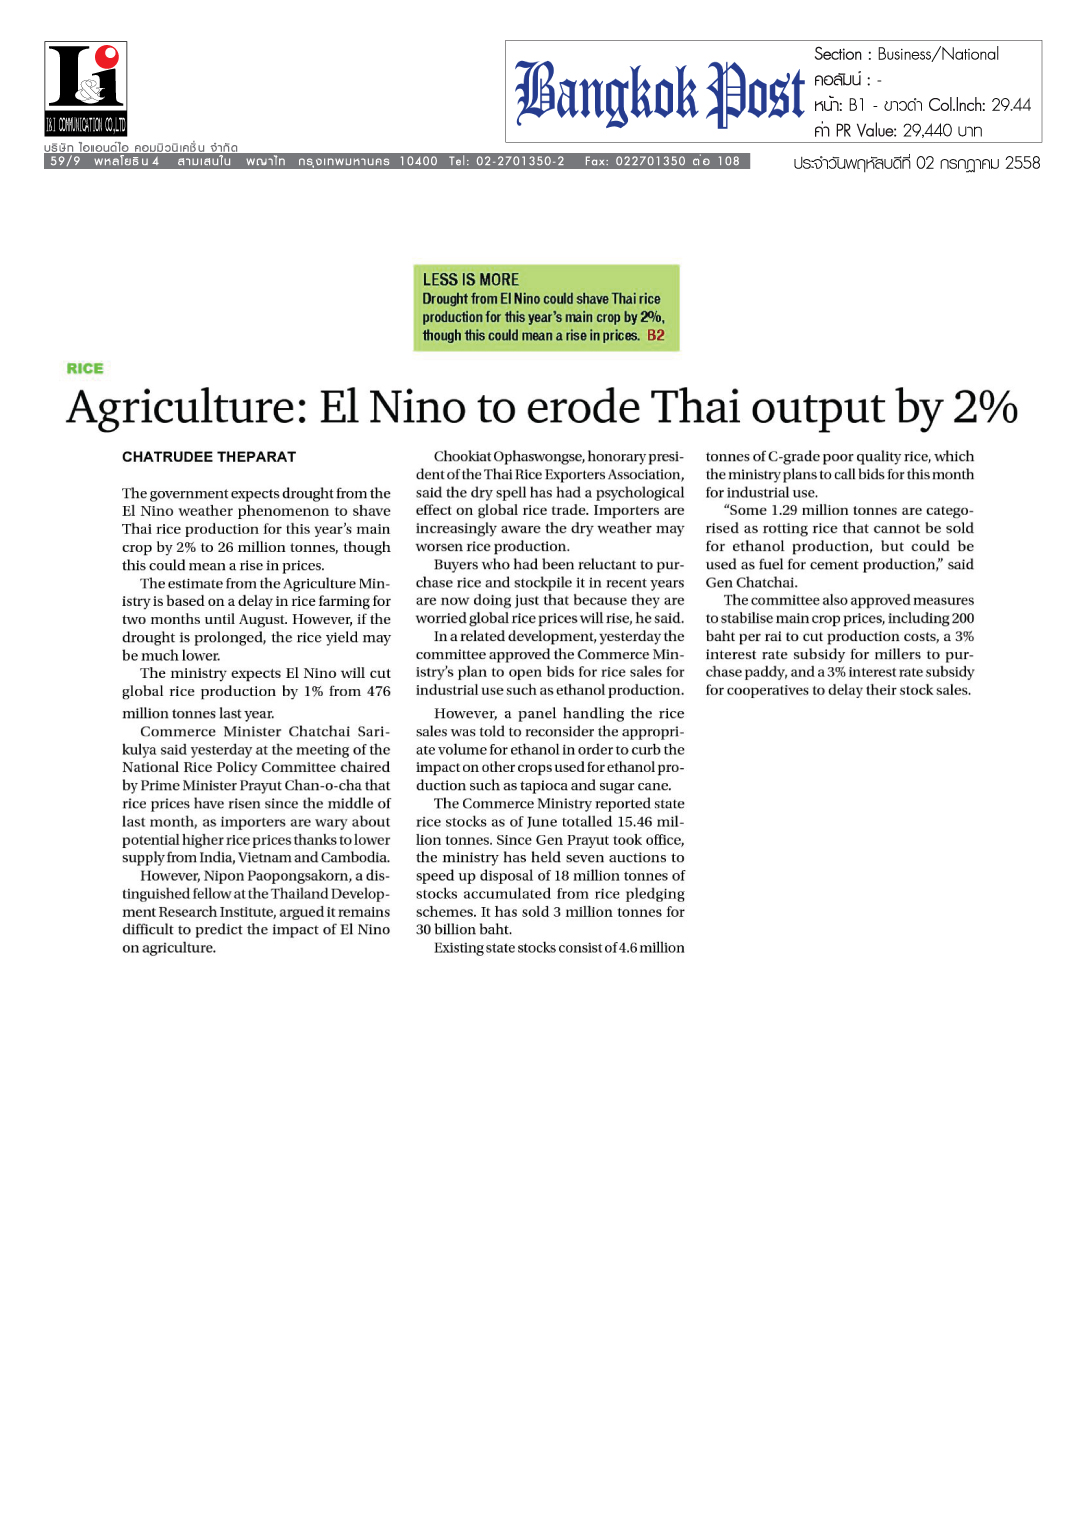 Bangkok Post  02-07-58  Agriculture El Nino to erode Thai output by 2%